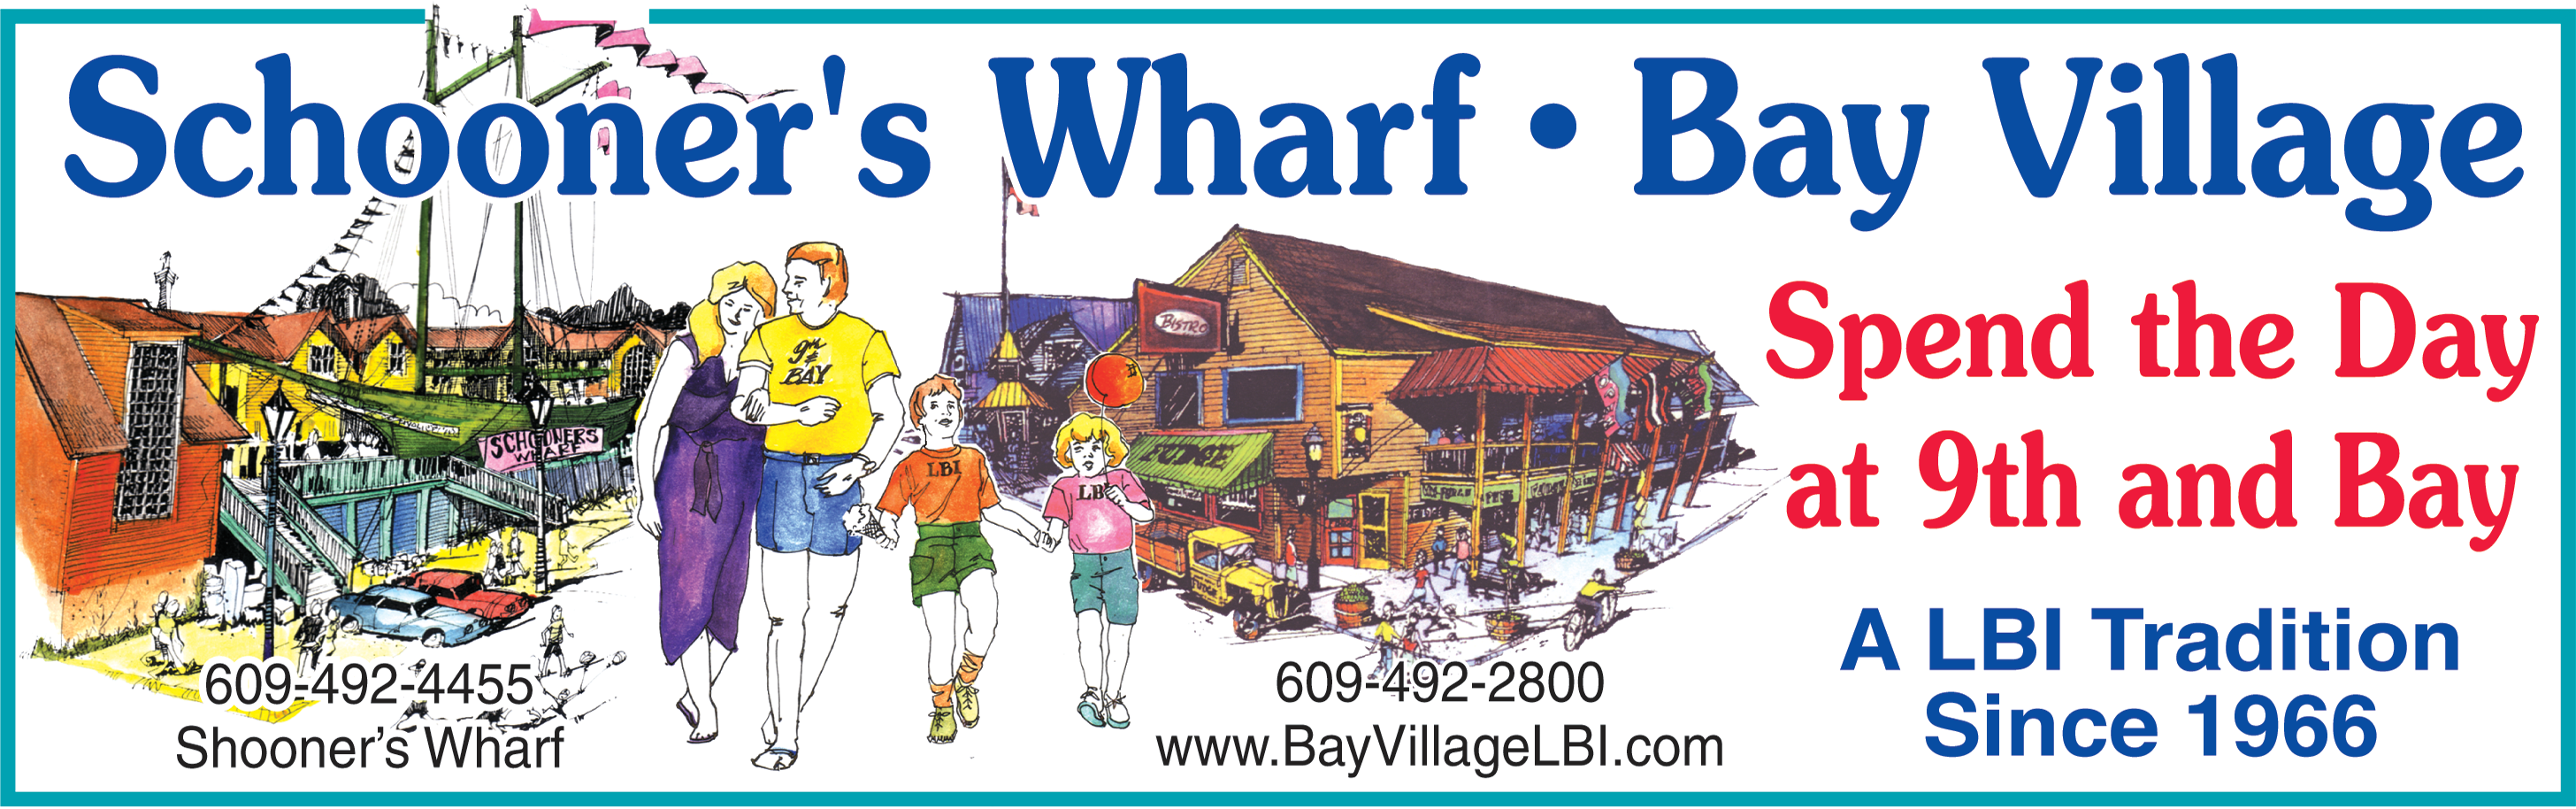 Bay Village & Schooner's Wharf Print Ad